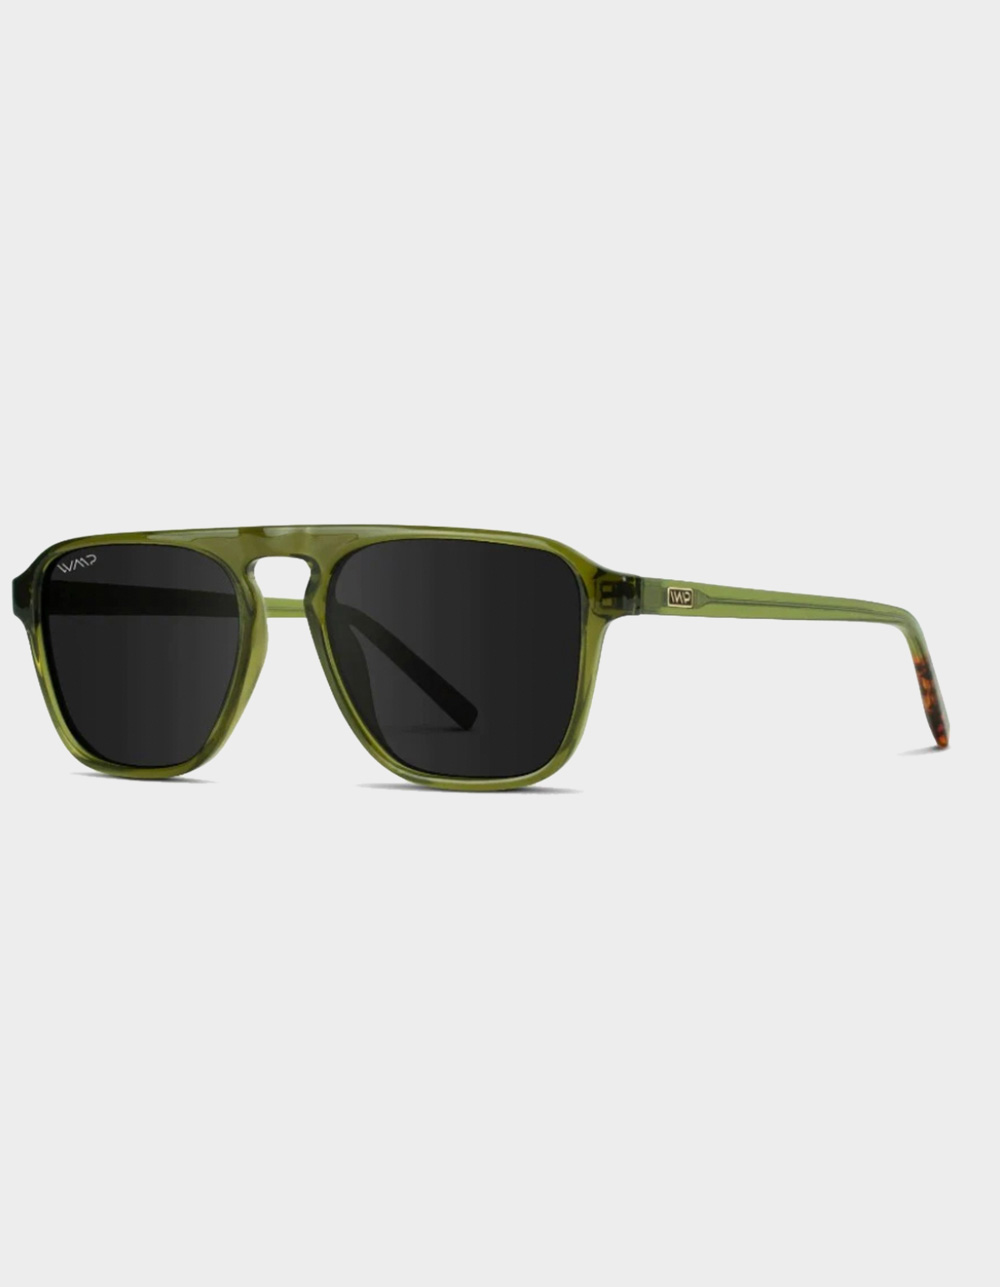 WMP EYEWEAR Emerson Polarized Sunglasses